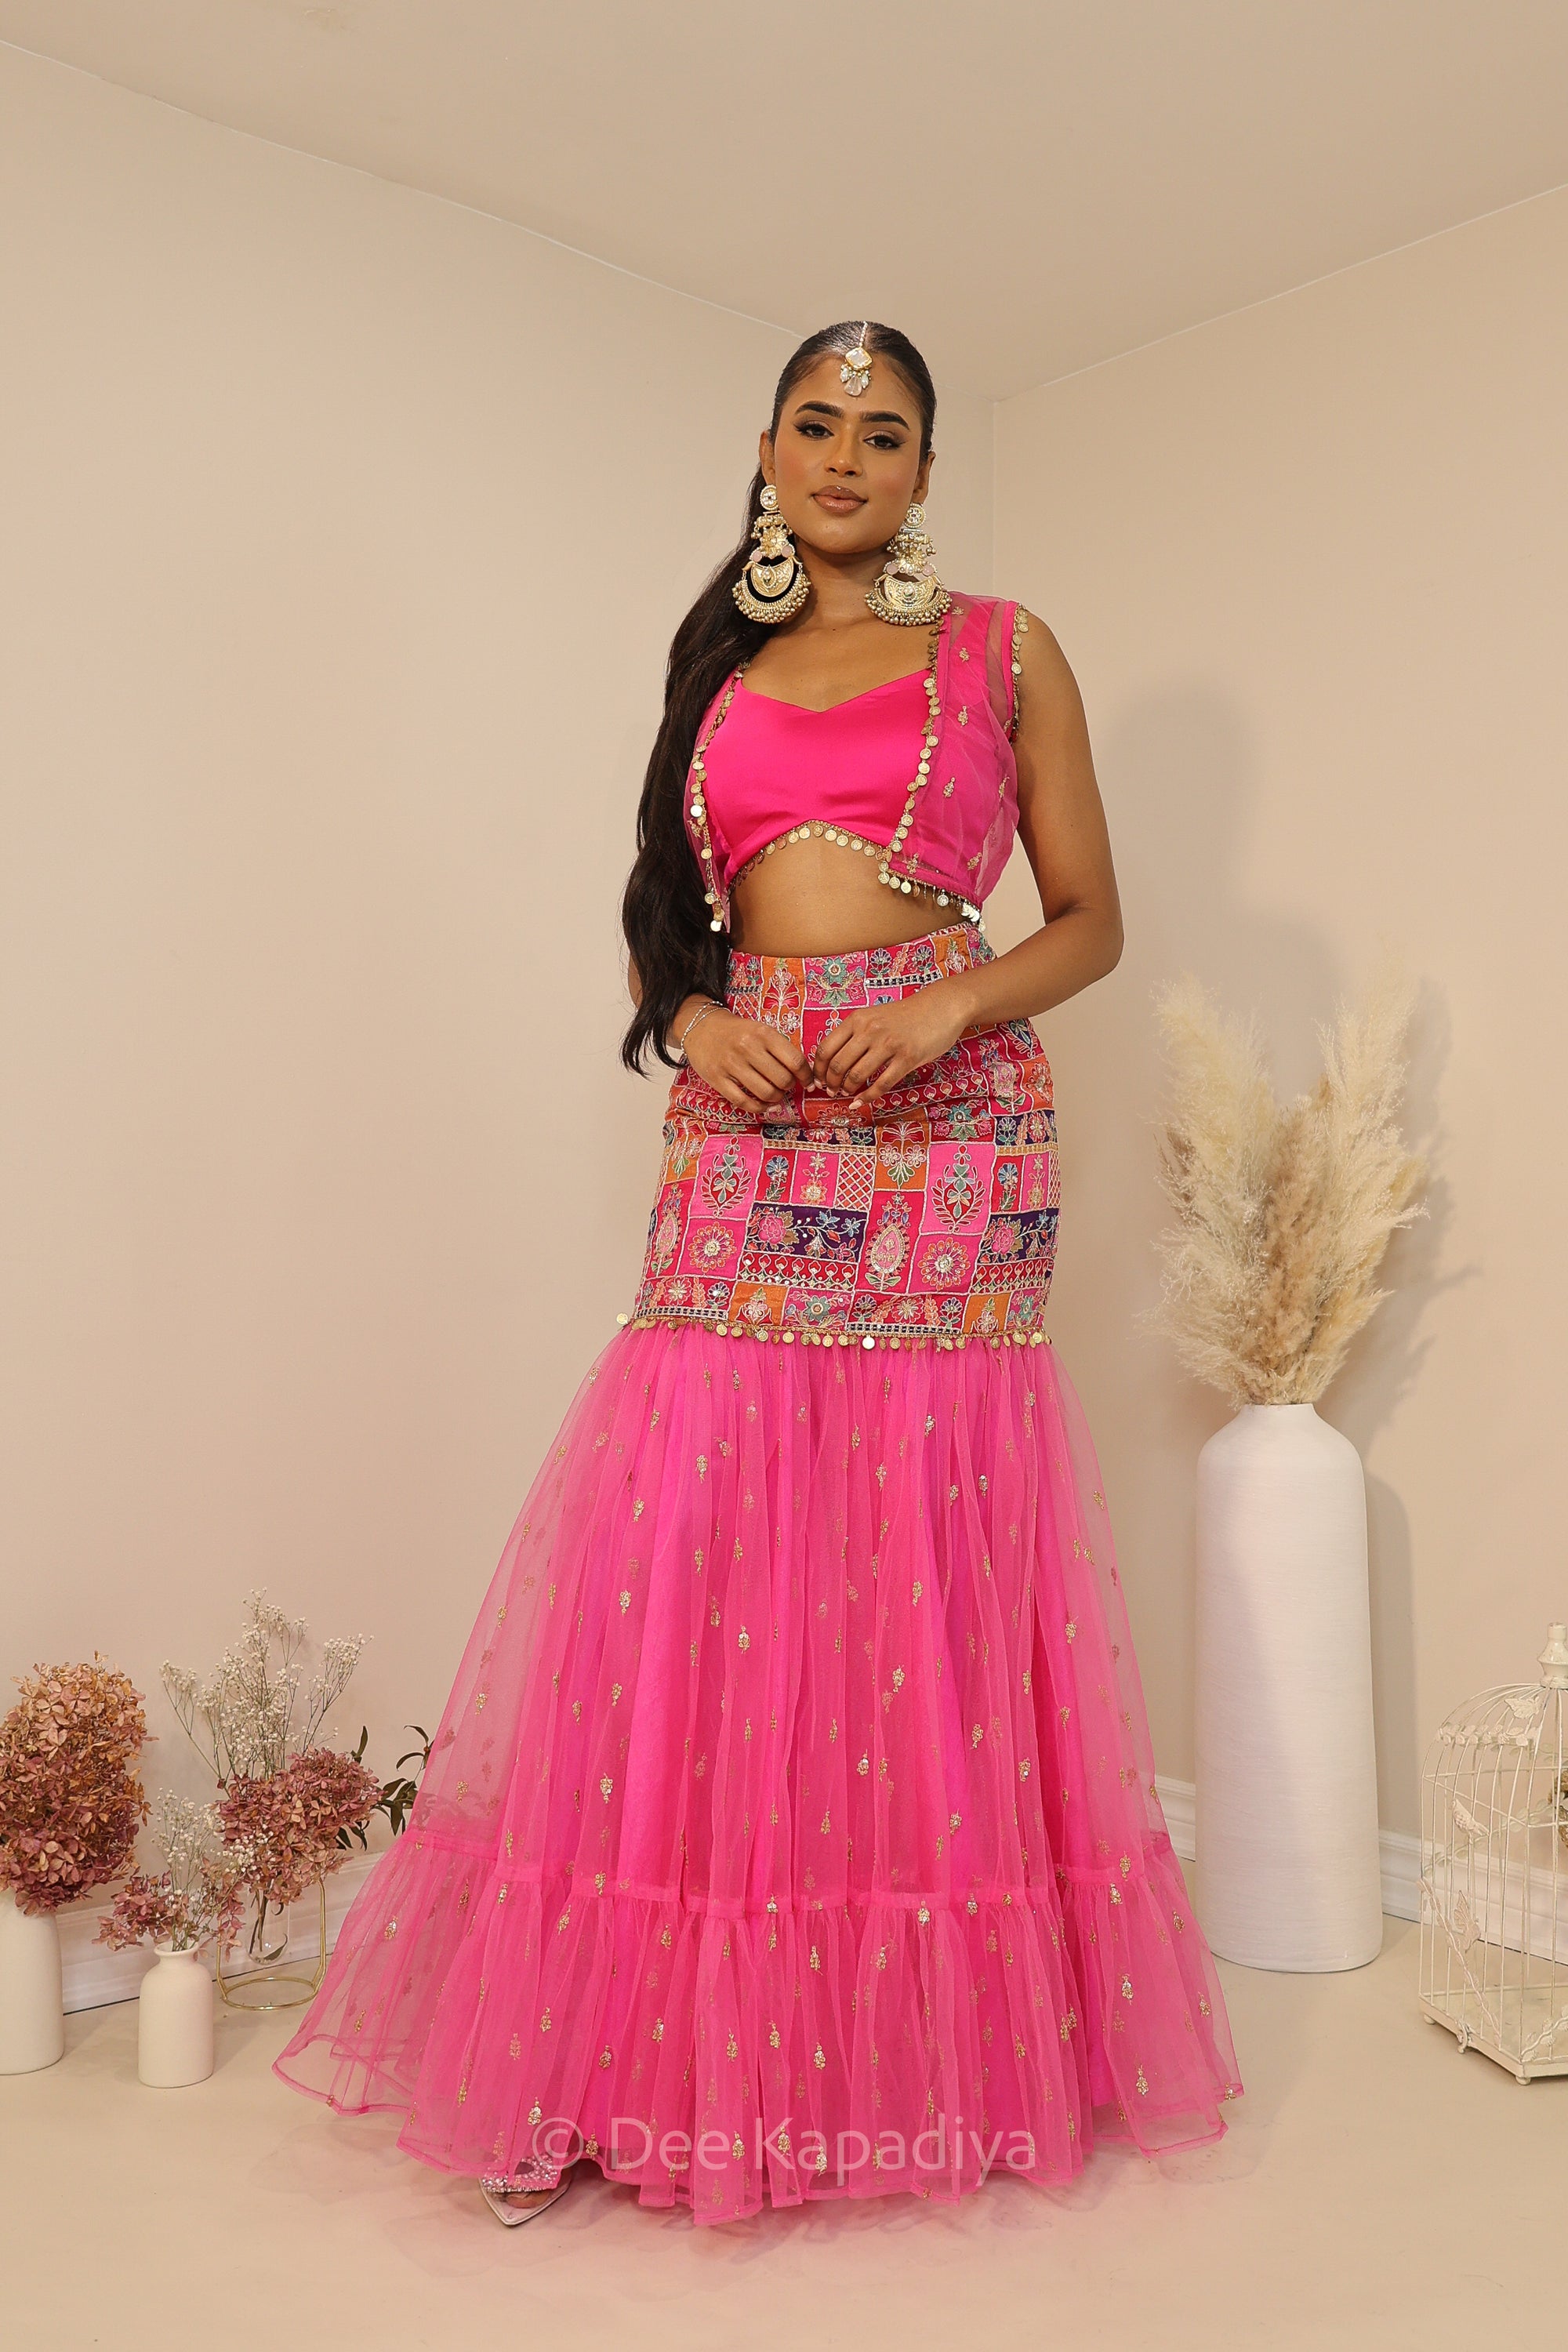 Simran from DDLJ, Hot pink corset mermaid lehenga set perfect for mehendi, sangeet, fiesta, bridal shower or welcome dinner